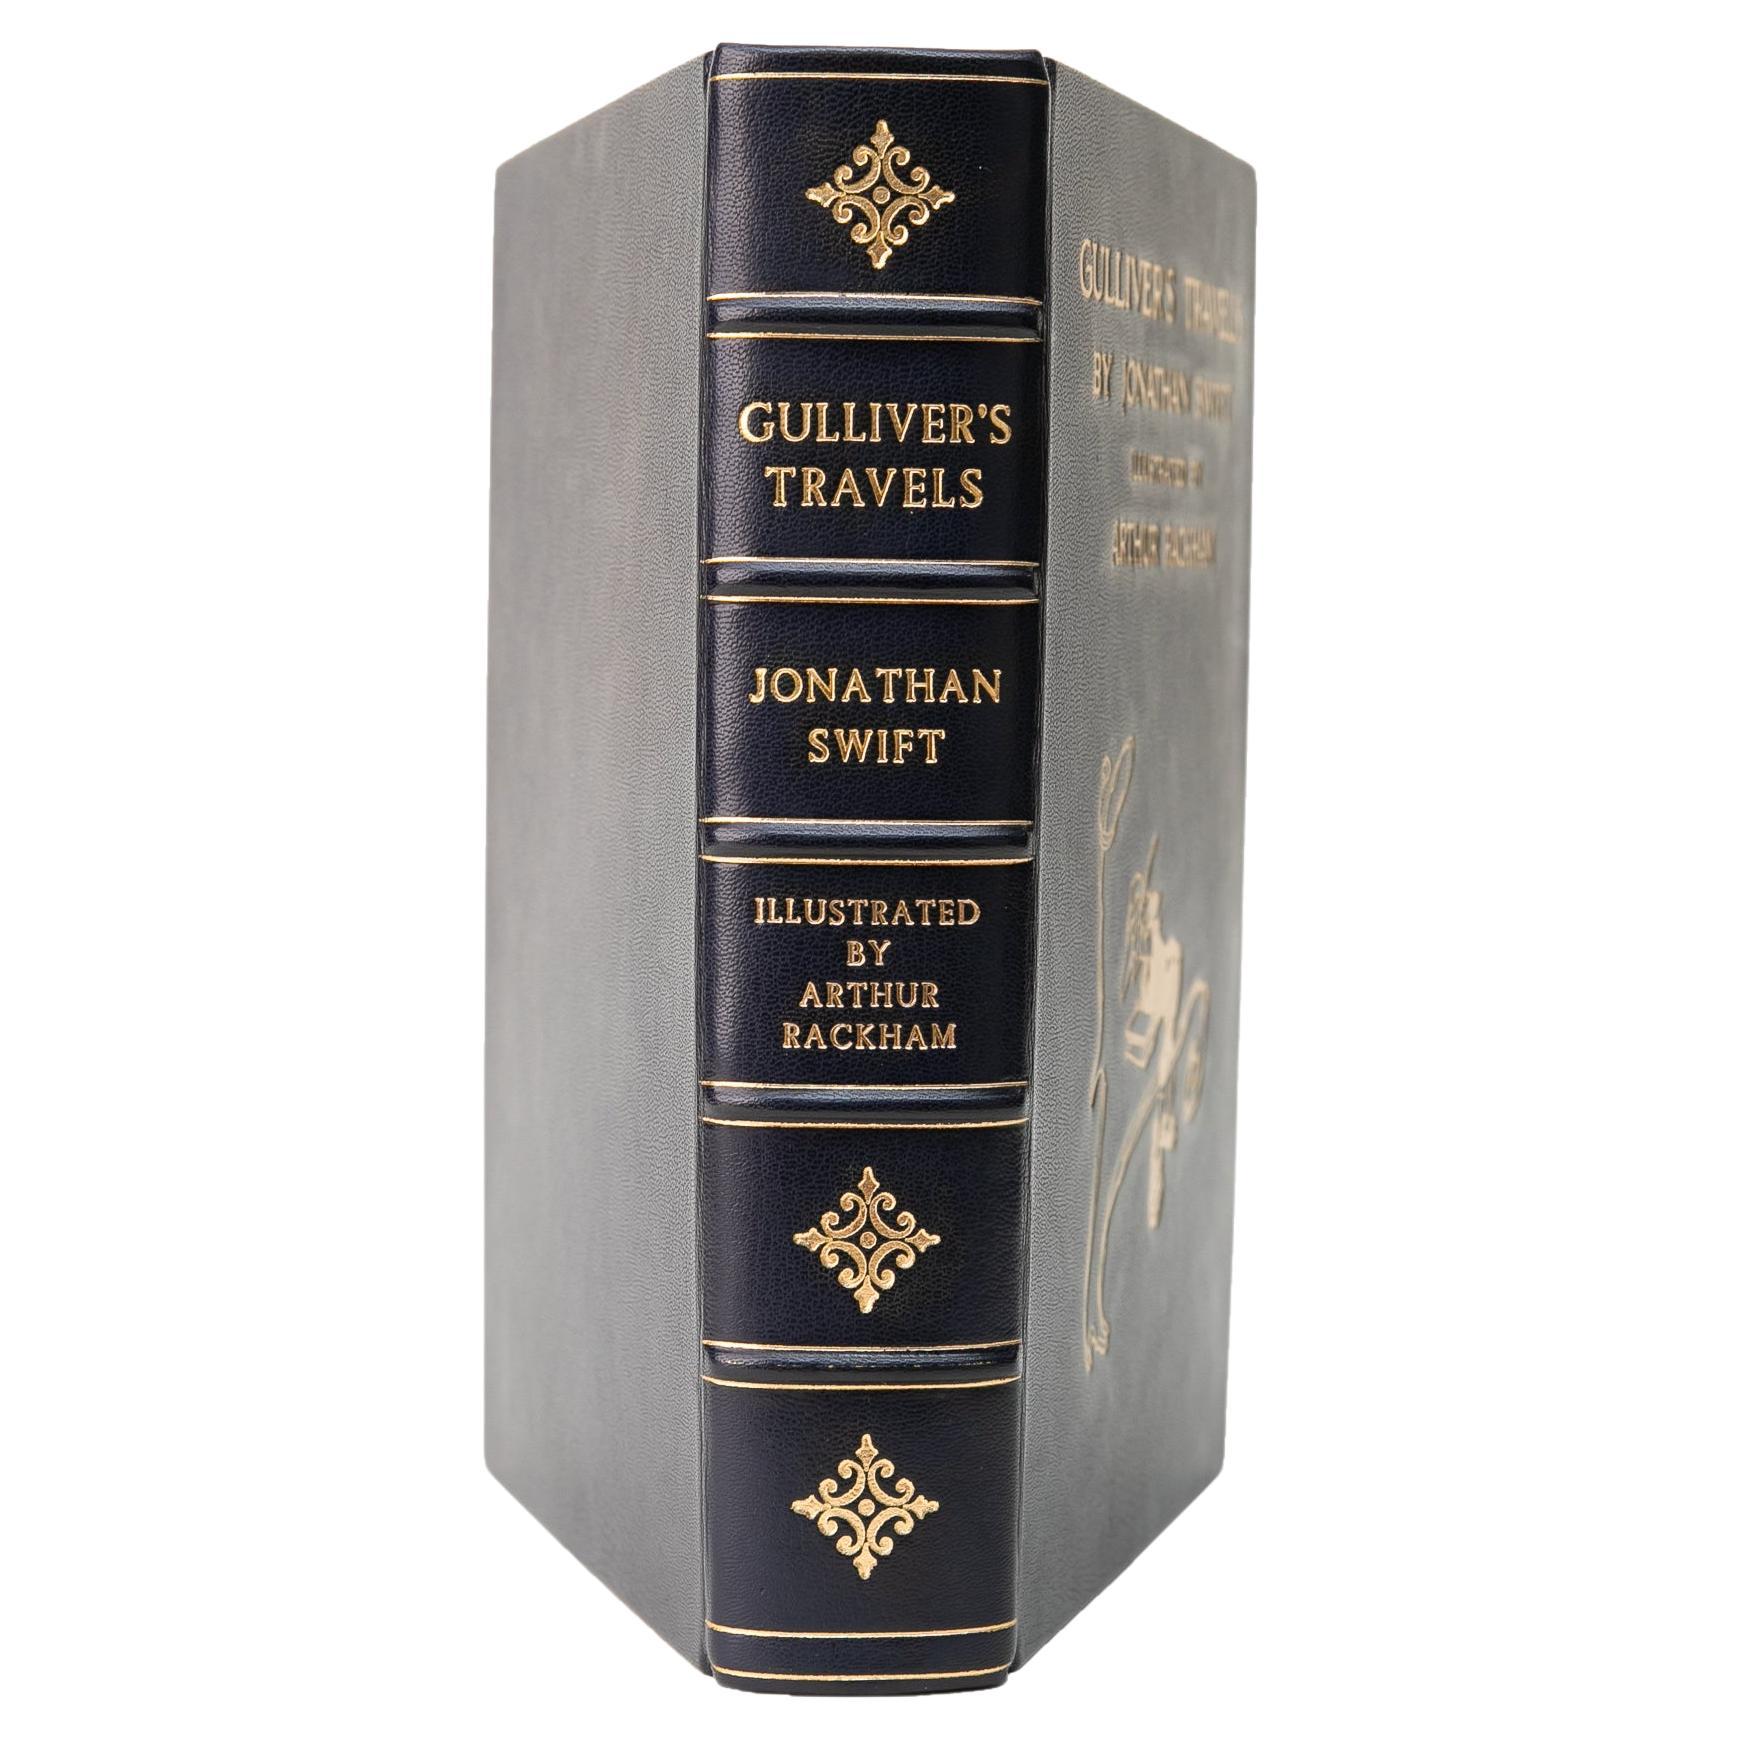 1 Volume. Jonathan Swift, Gulliver's Travels. For Sale